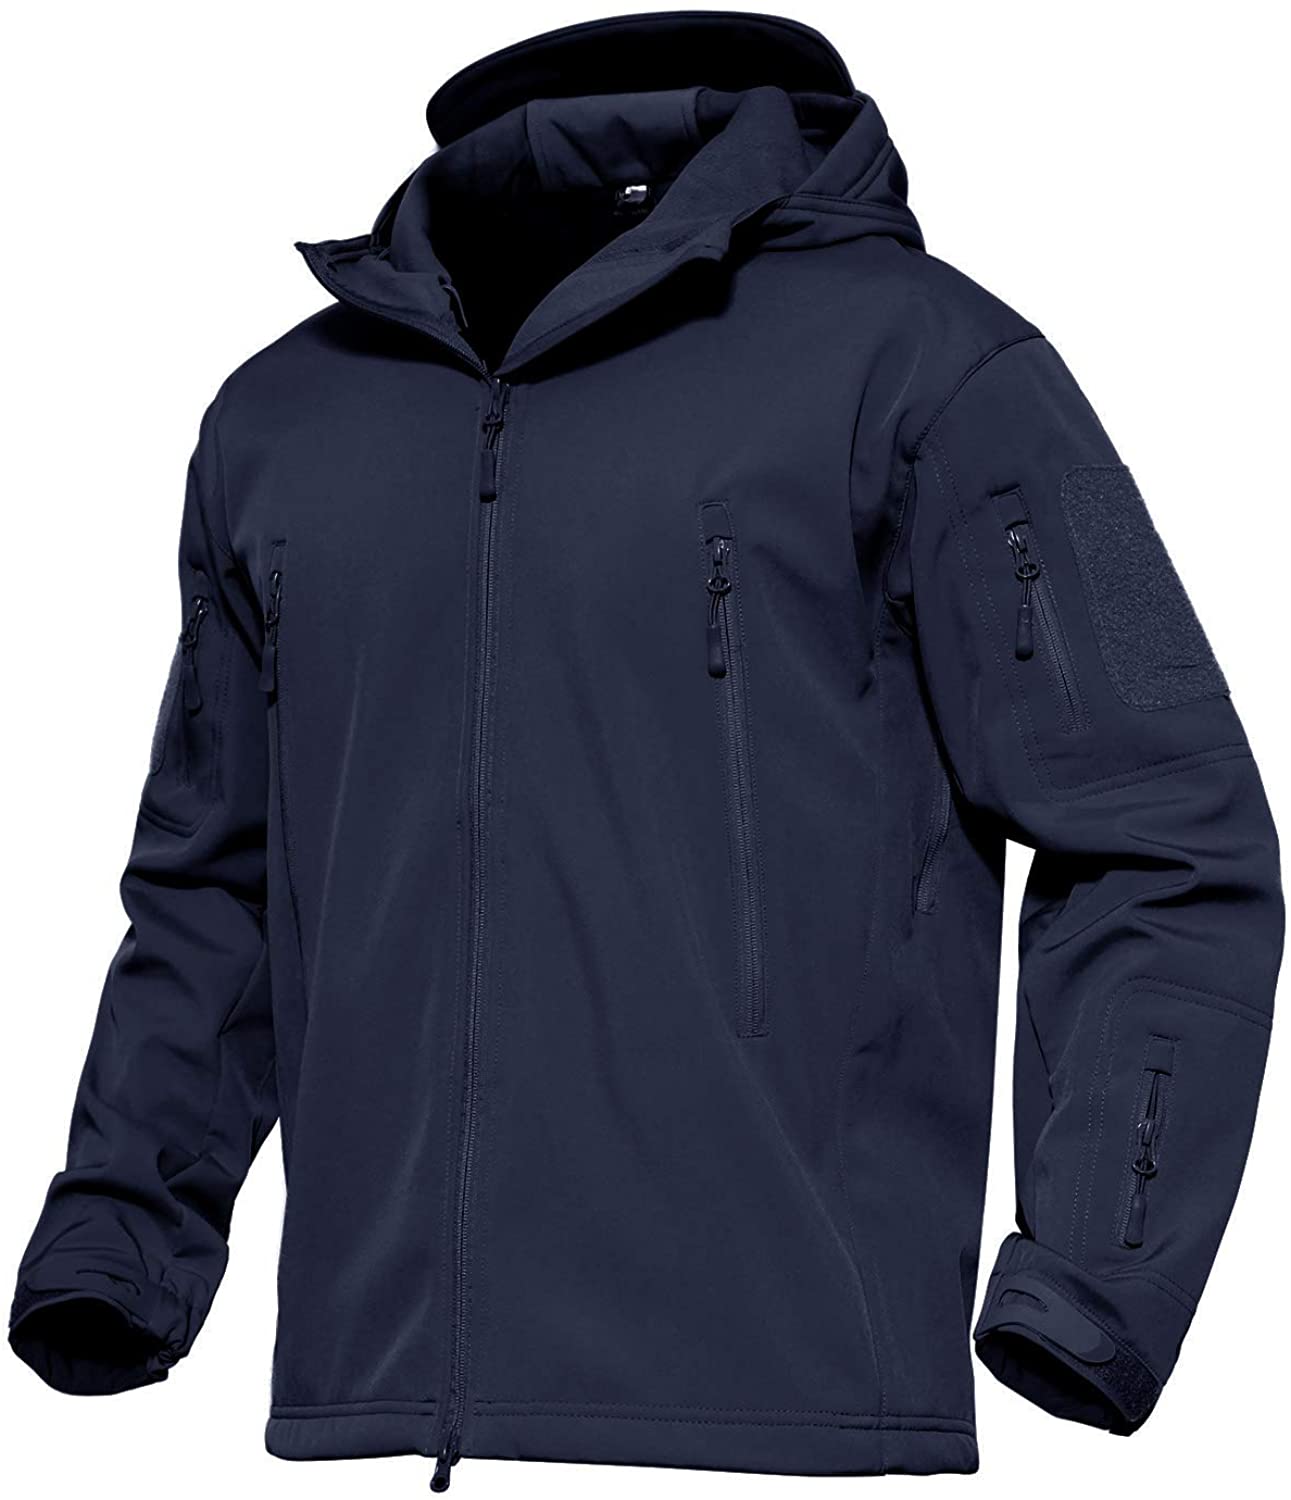 MAGCOMSEN Men's Winter Coats Water Resistant Snow Ski Jacket Fleece Lined Parka 4 Pockets 